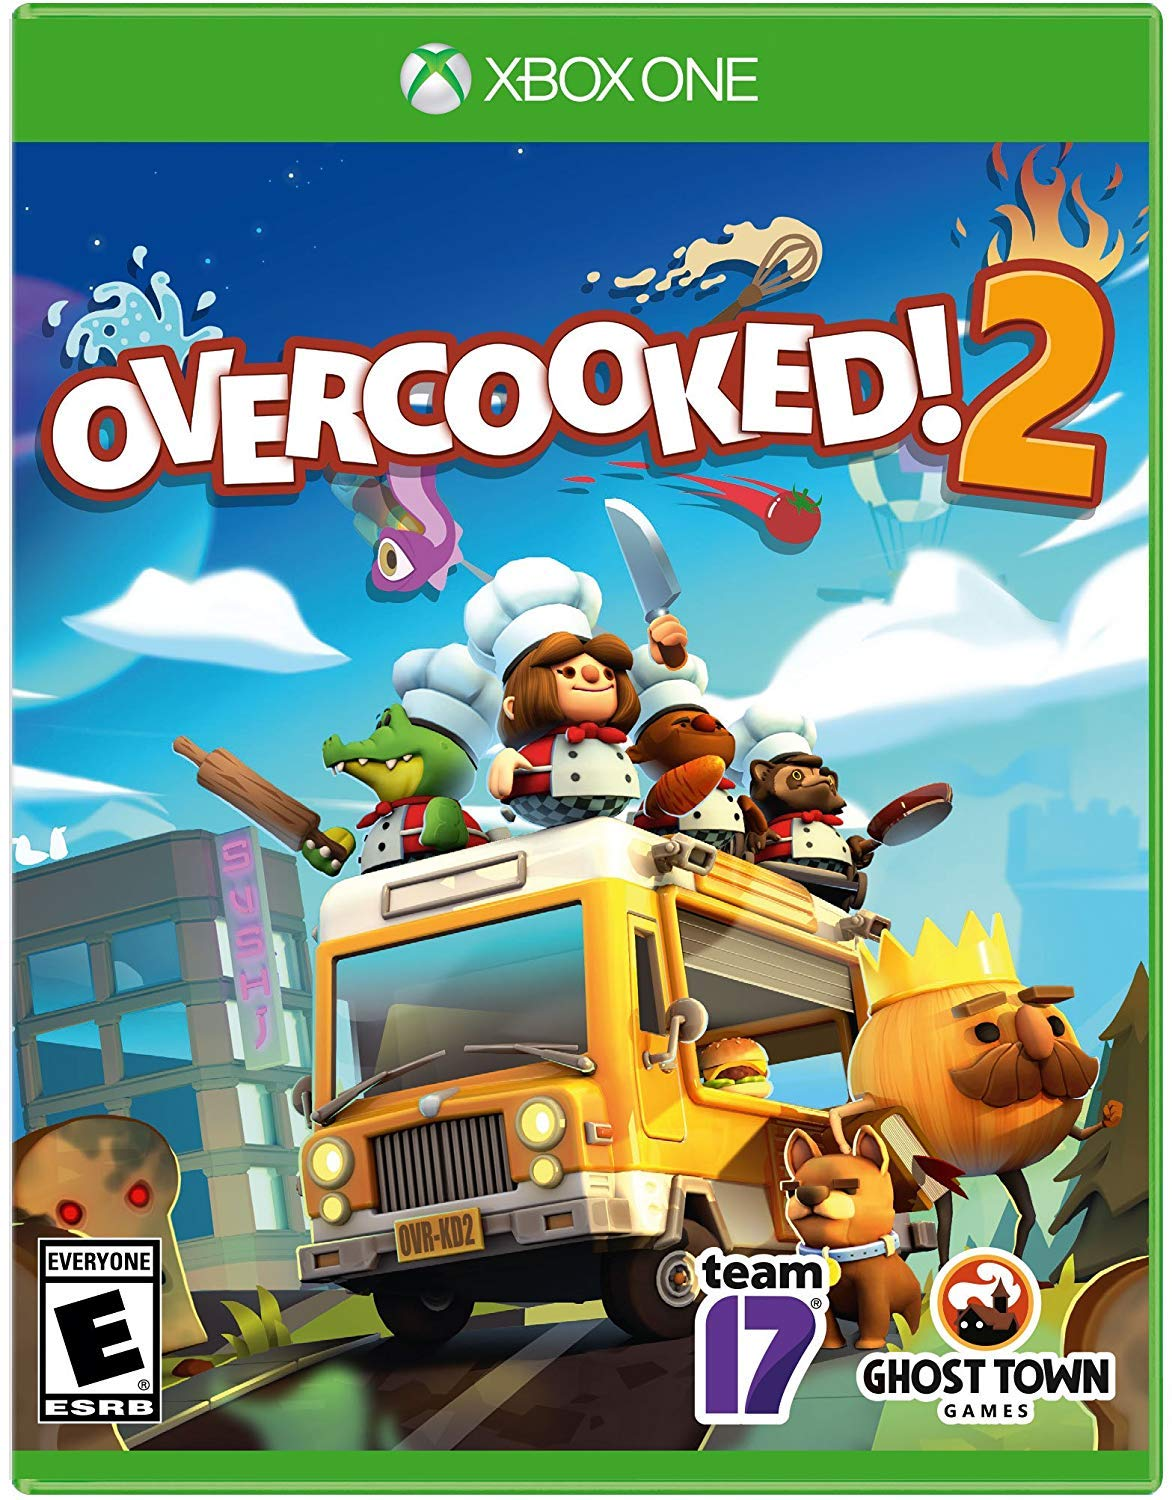 Игра Overcooked! 2, цифровой ключ для Xbox One/Series X|S, Русский язык, Аргентина